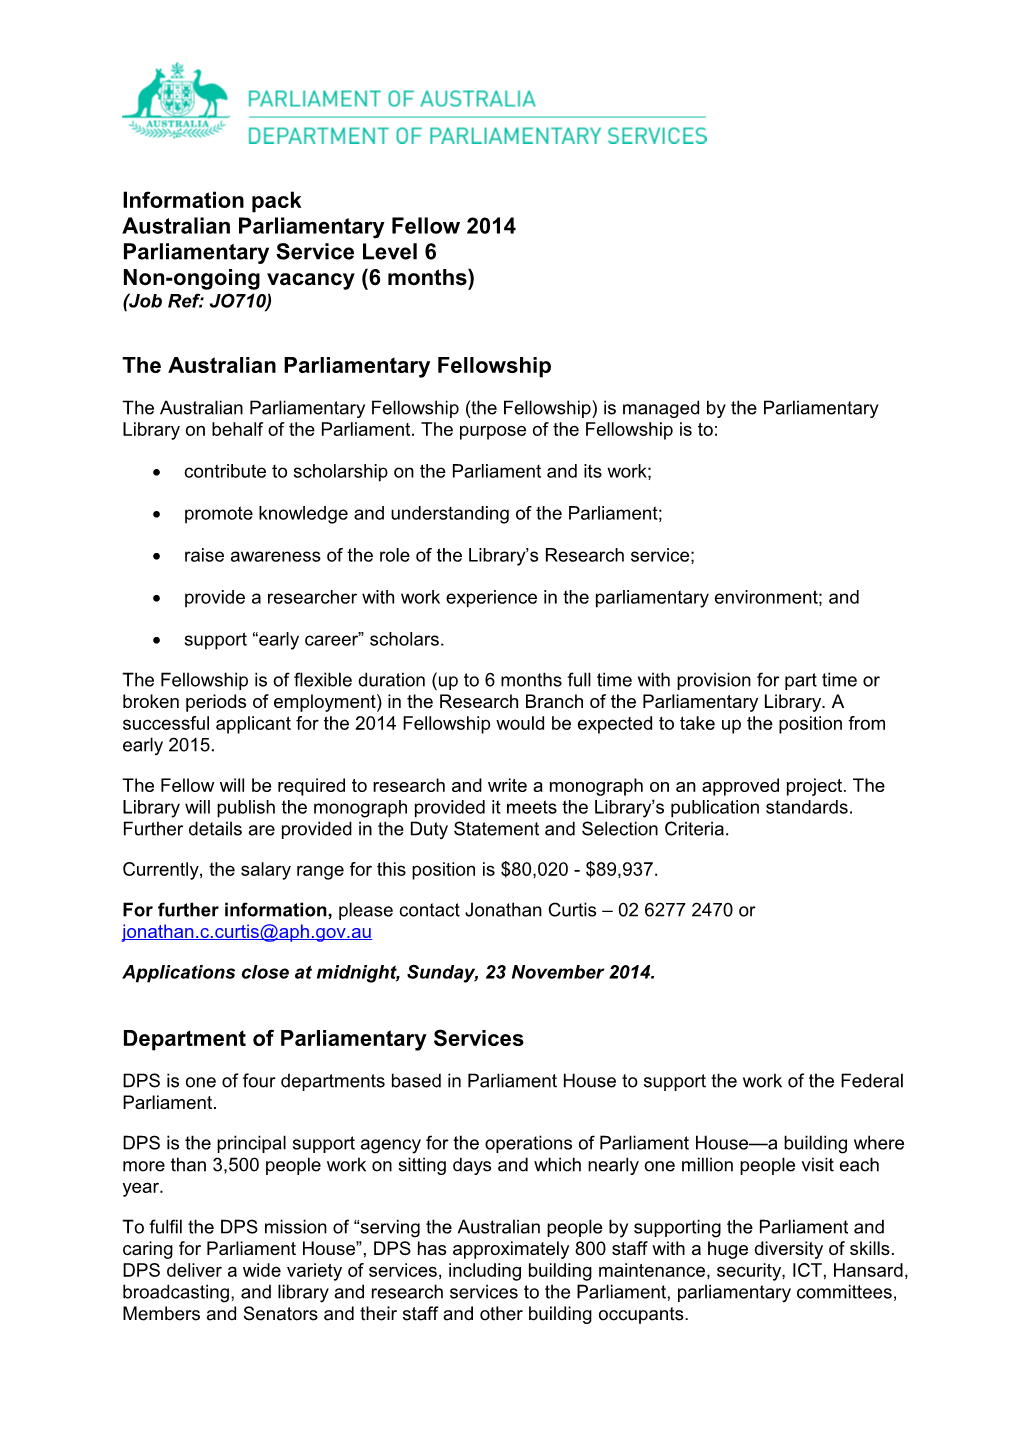 The Australian Parliamentary Fellowship